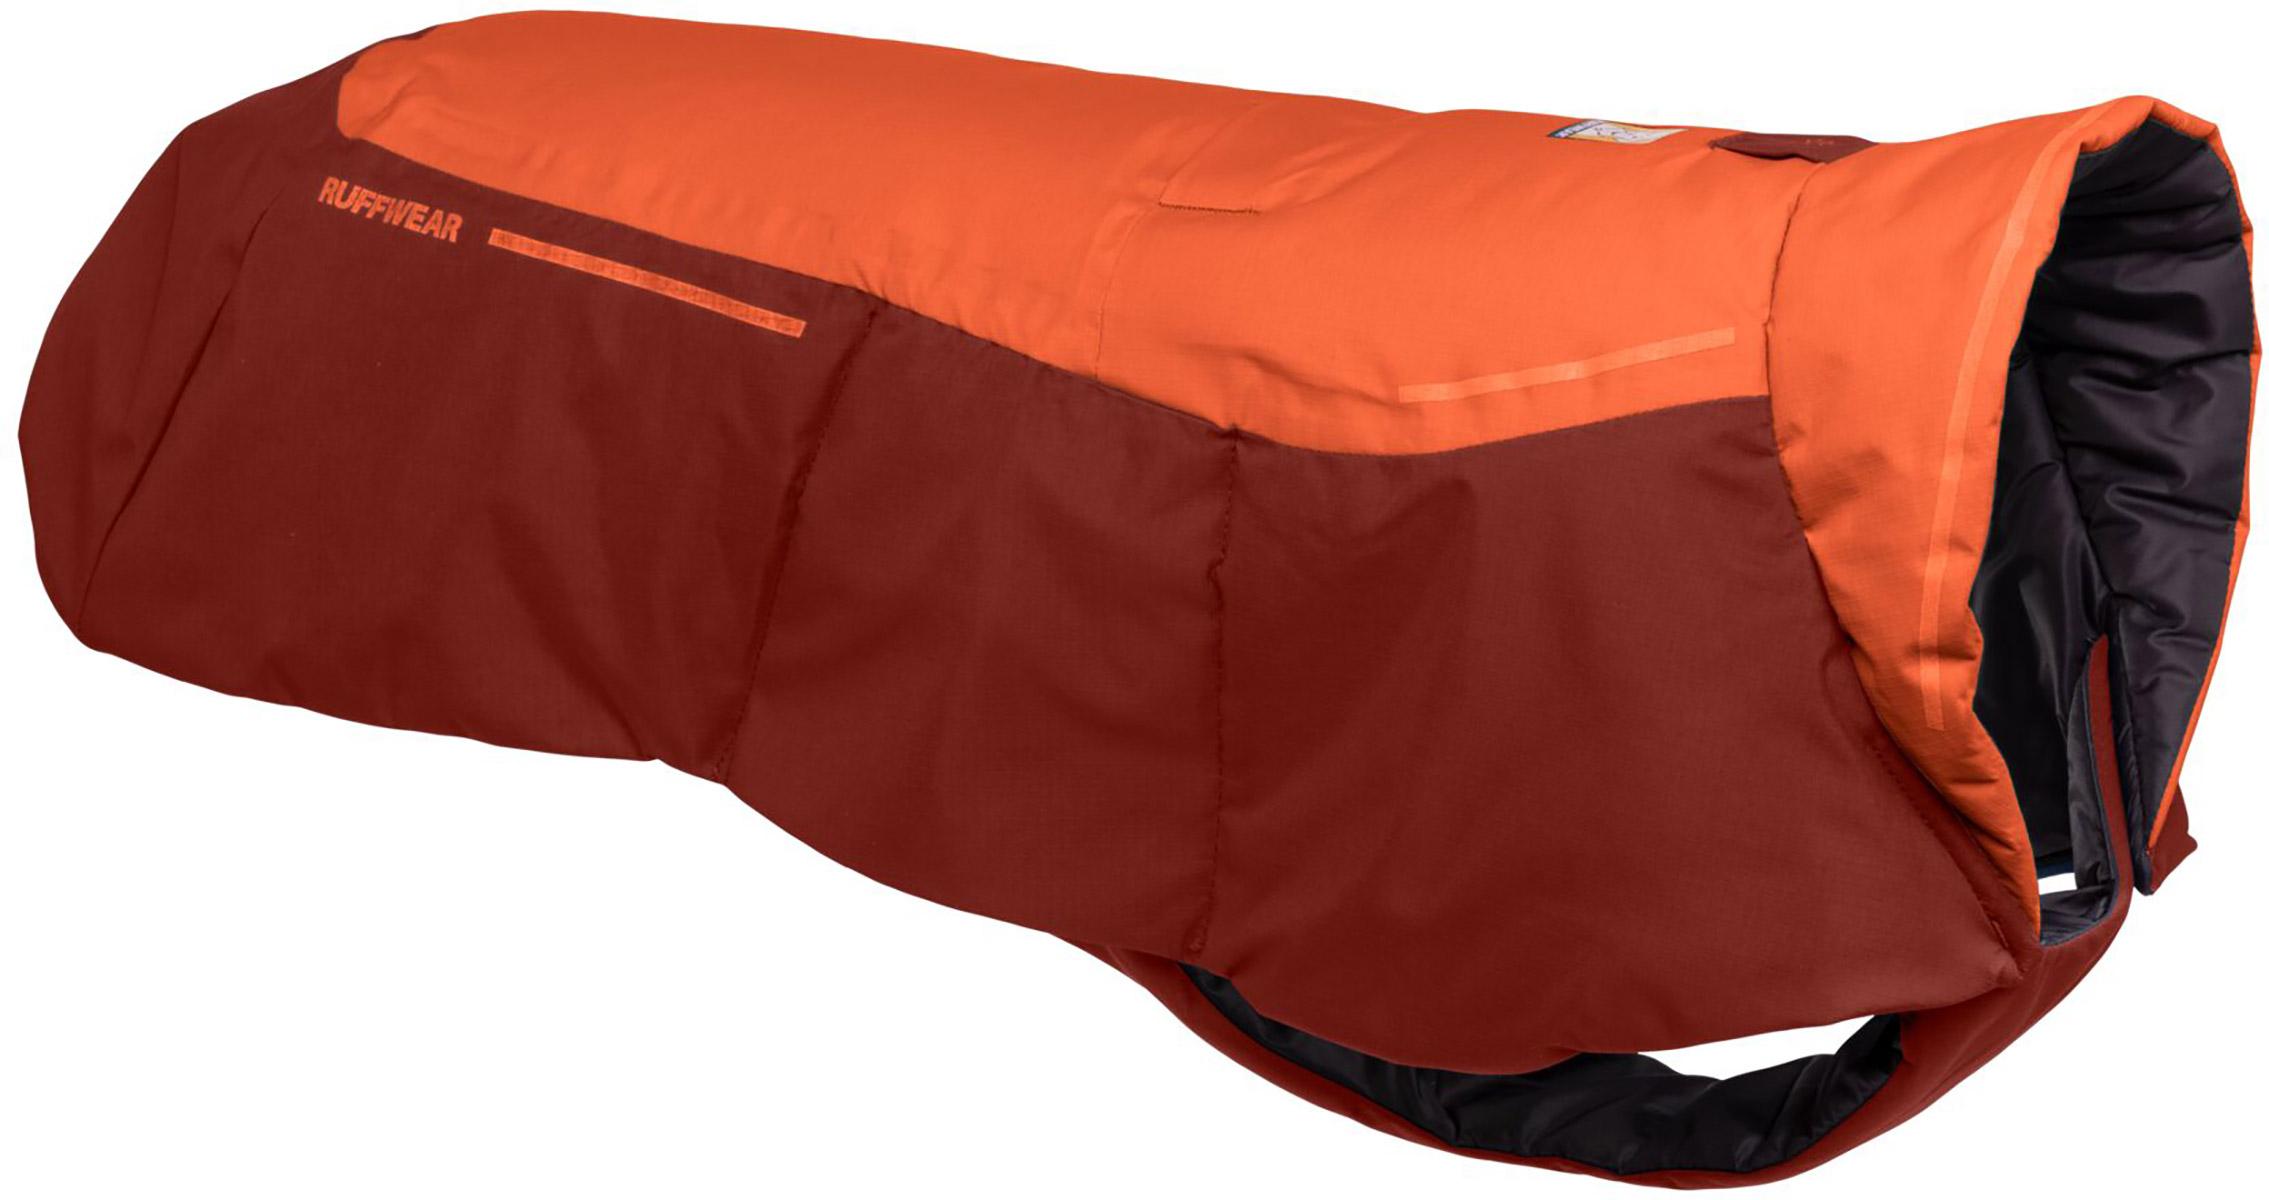 Ruffwear Vert Insulated Dog Coat - Canyonlands Orange